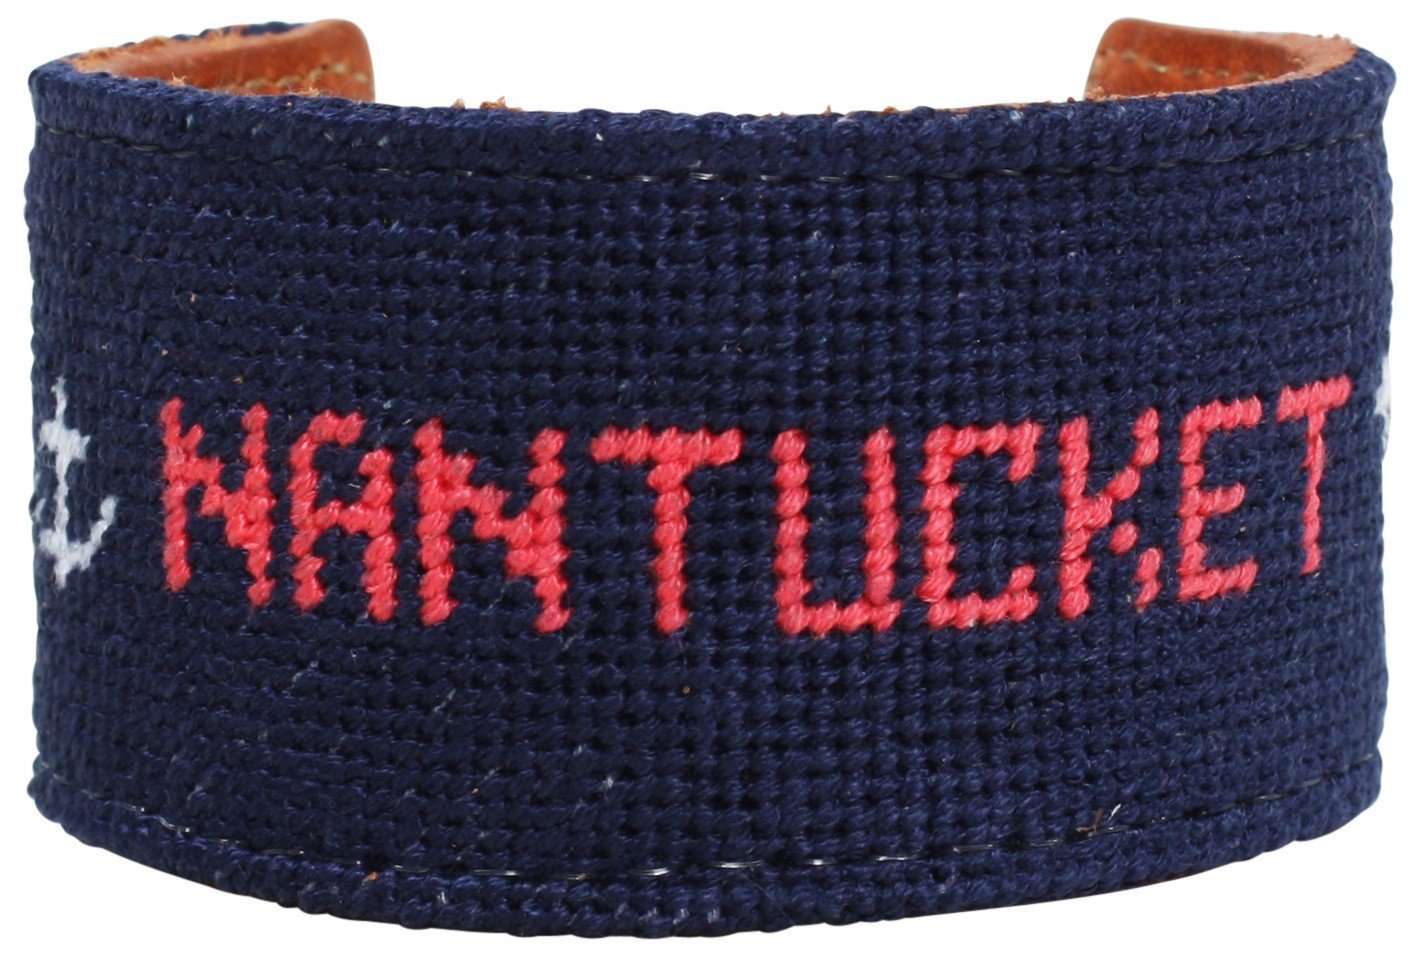 Nantucket Needlepoint Cuff Bracelet by York Designs - Country Club Prep